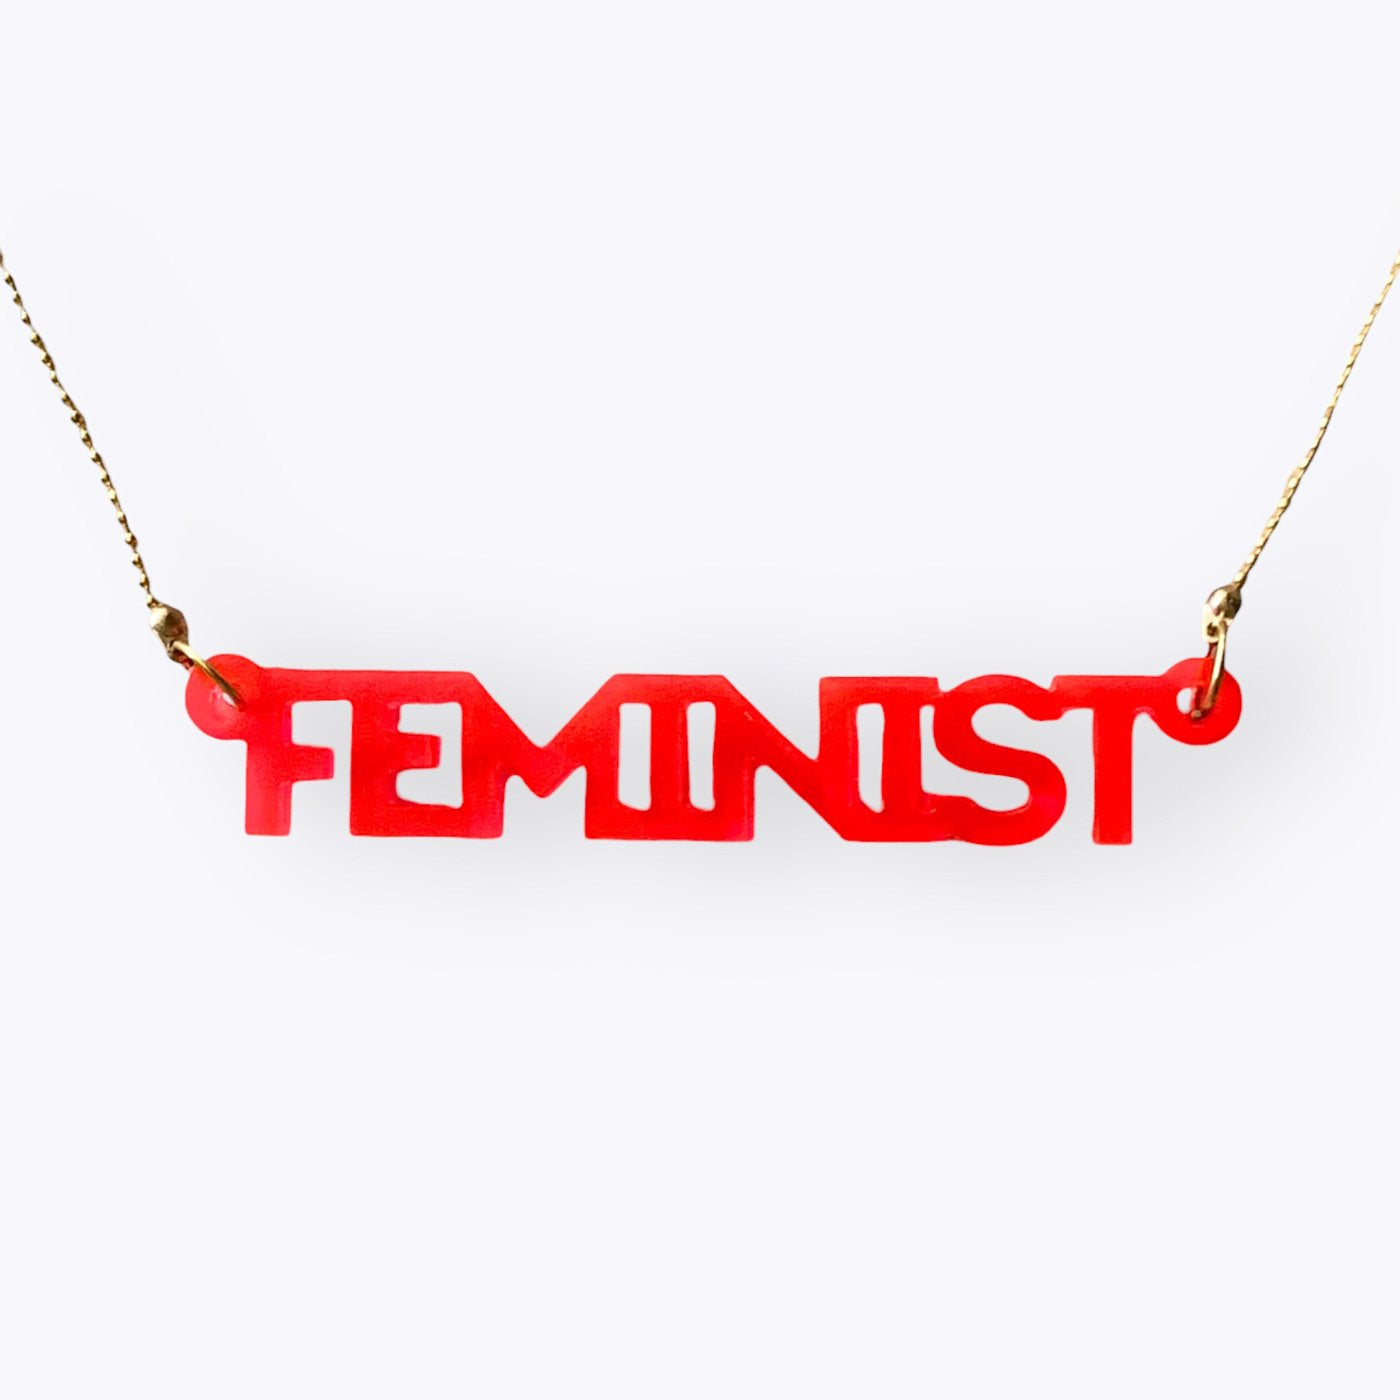 All Things We Like - Feminist